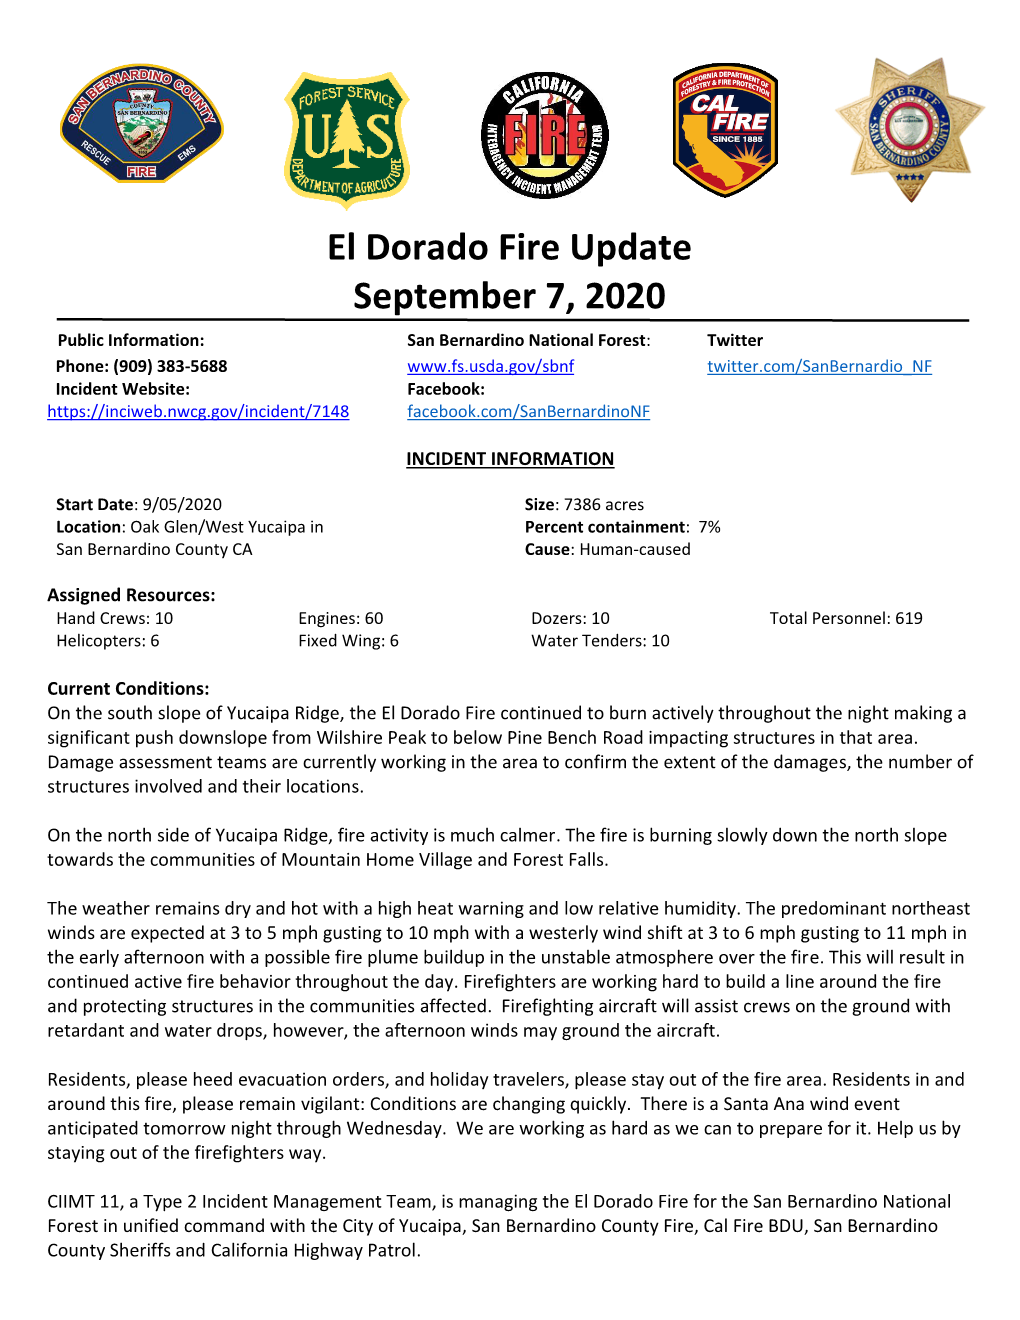 El Dorado Fire Update September 7, 2020